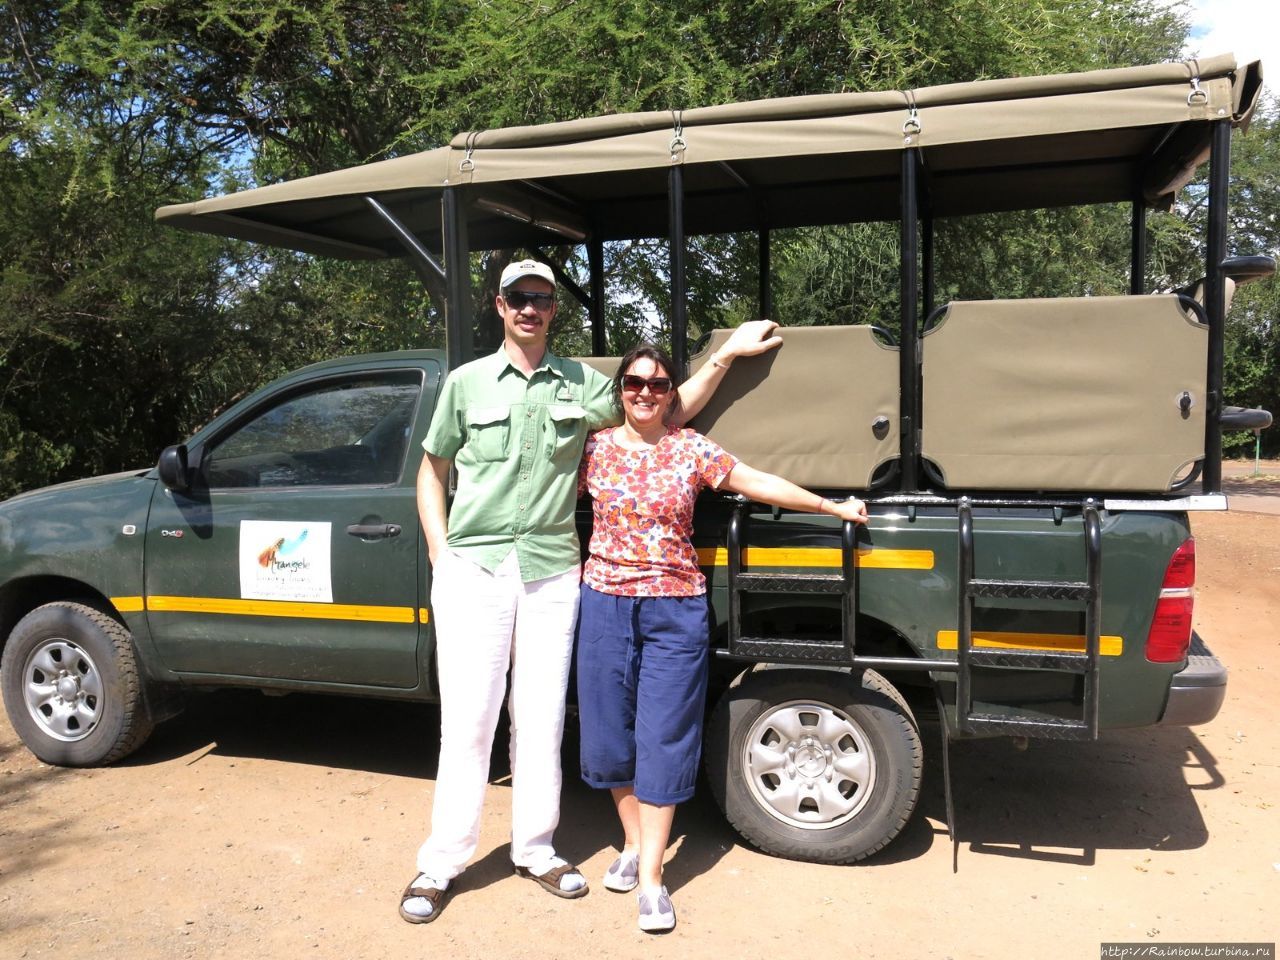 Сафари в  парке  Крюгер Национальный парк Крюгер, ЮАР